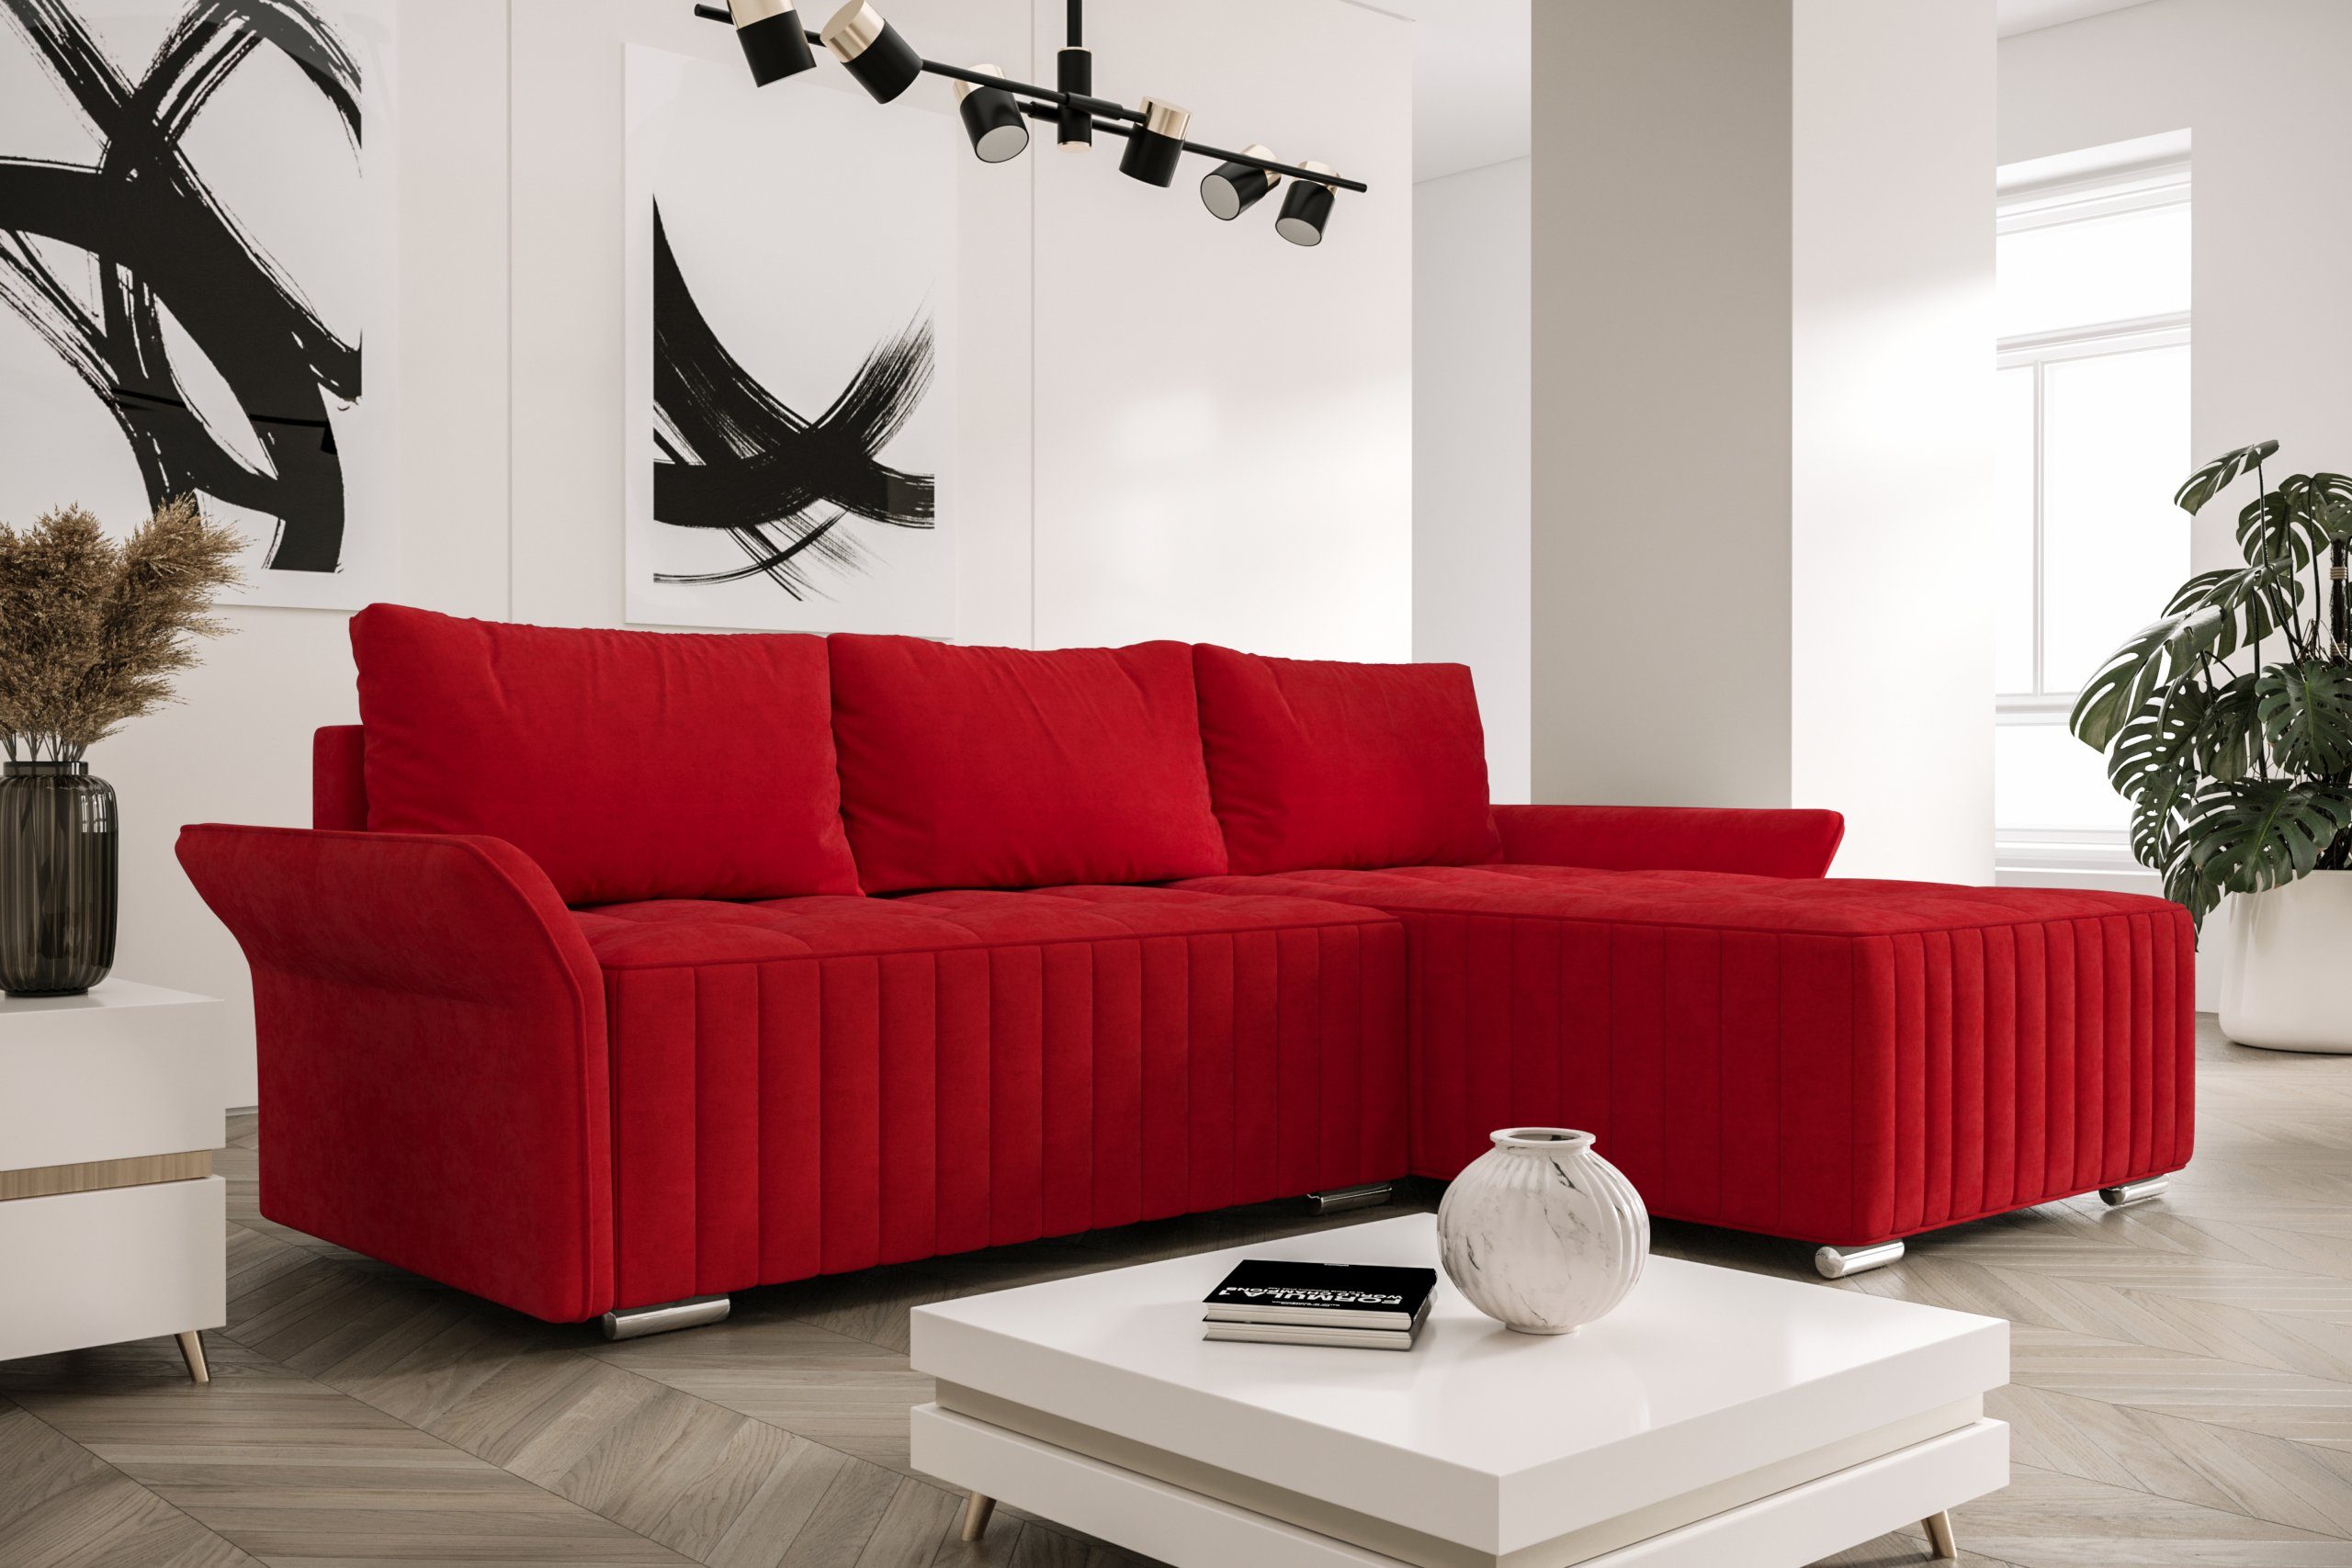 ROYAL24_MARKT Ecksofa Elegante Komfortzone Moderne Ecksofas, Flexibles Wohn-Set, Moderner Stil, Ausklapp-Automat, Rückenkissen inklusive Rot